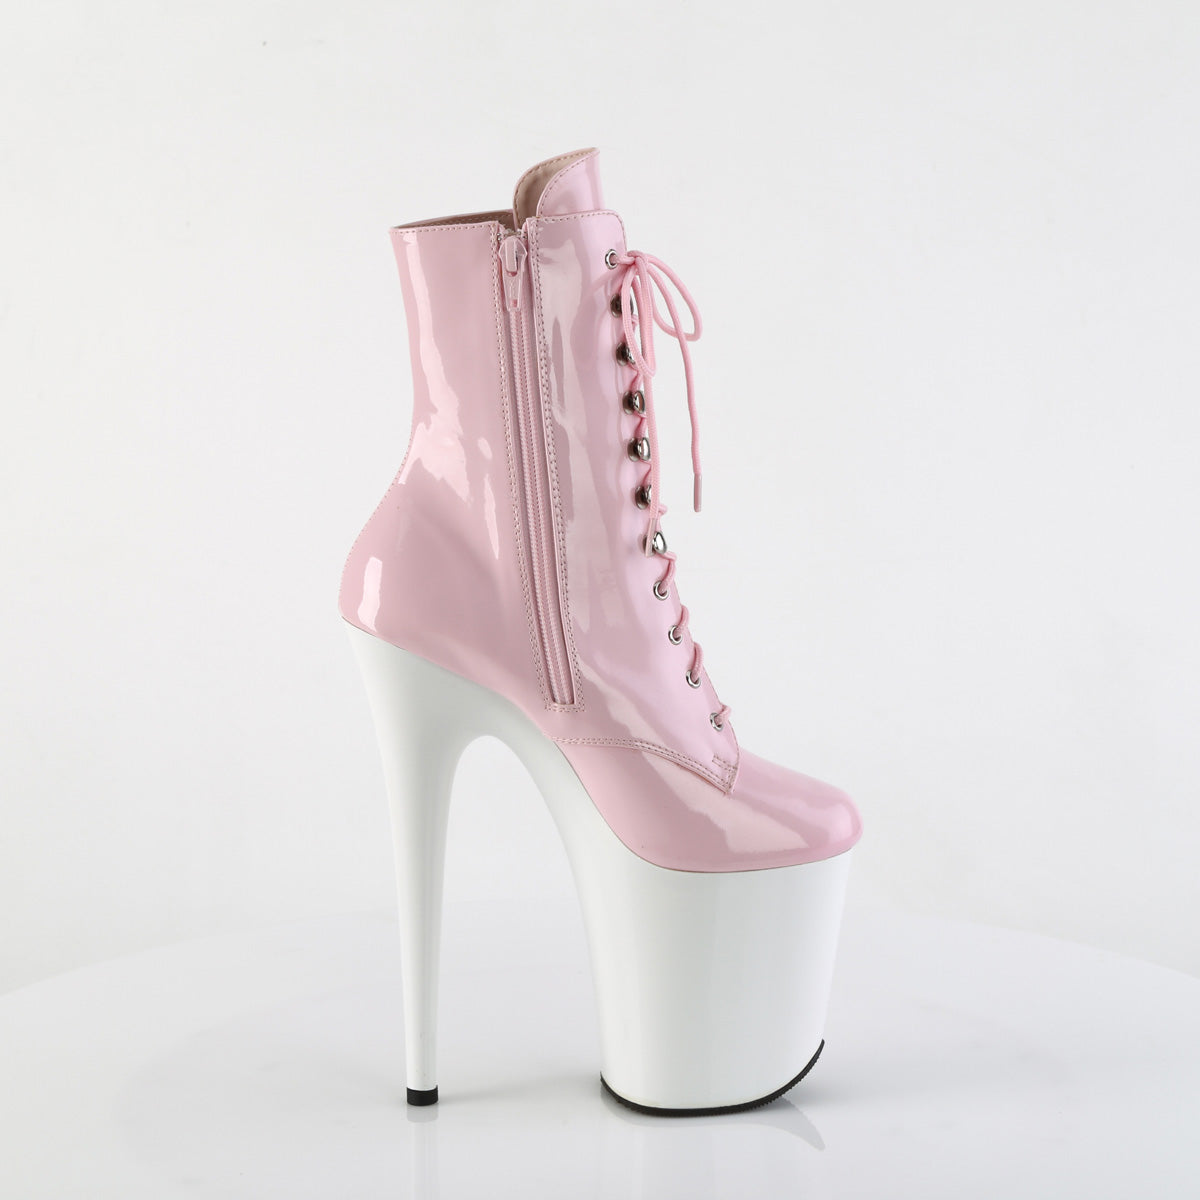 8 Inch Heel FLAMINGO-1020 Baby Pink Patent White